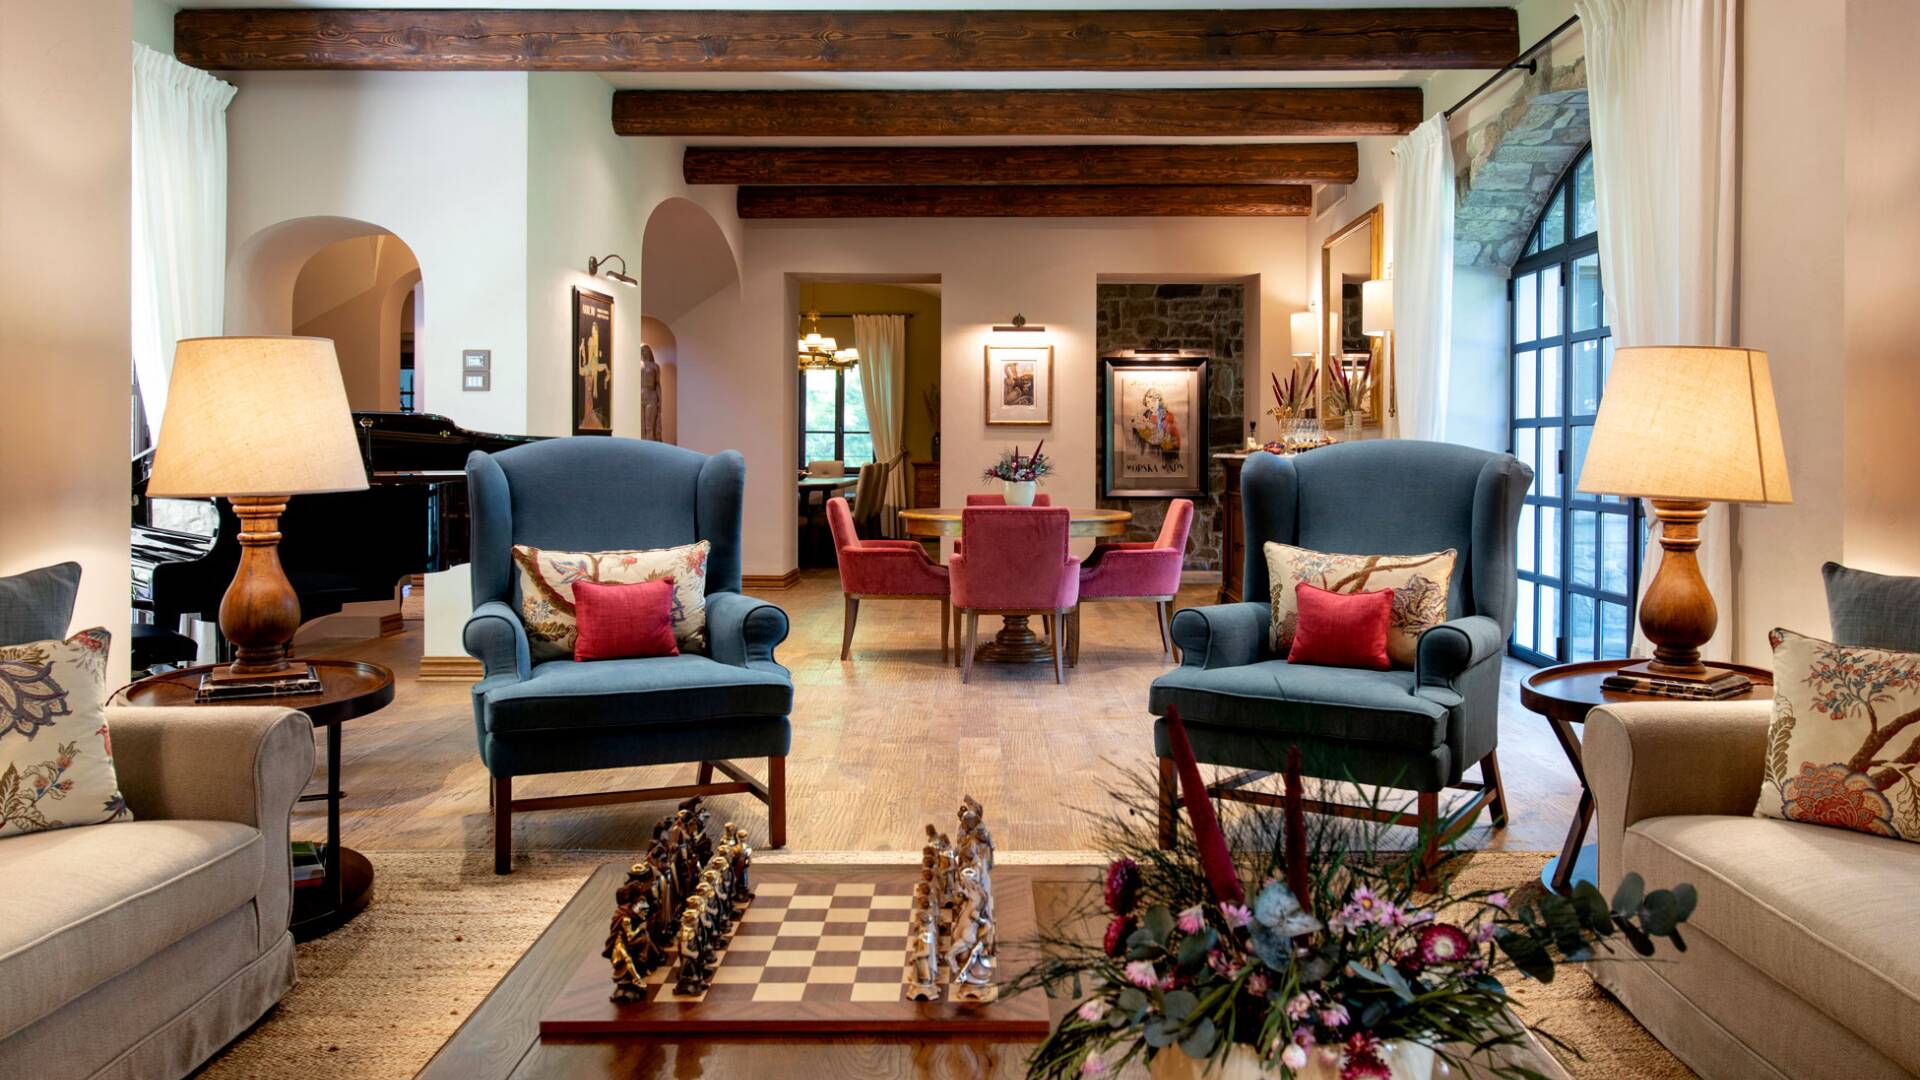 luxury large villas in Umbria for rent. Ground floor